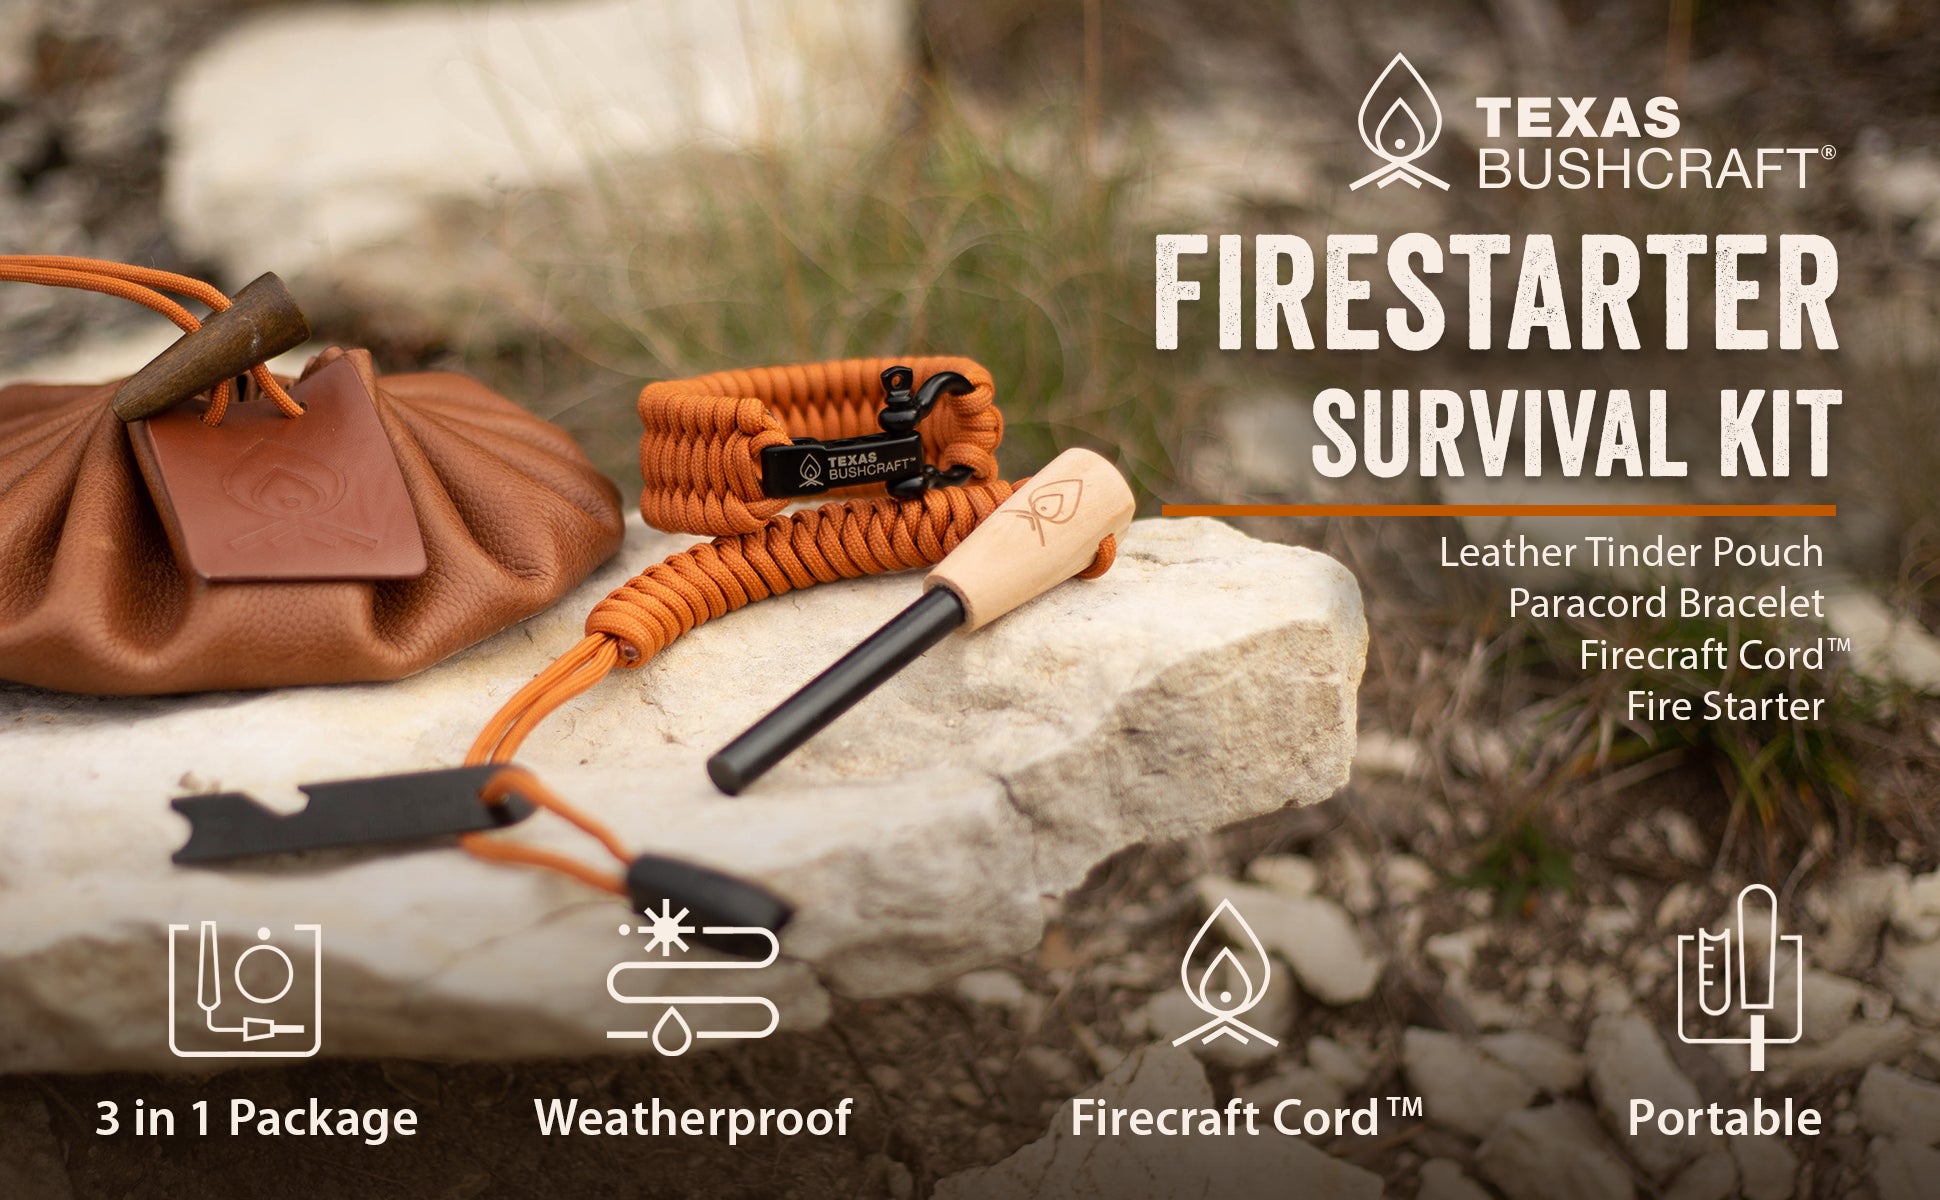 Texas Bushcraft Firestarter Kit